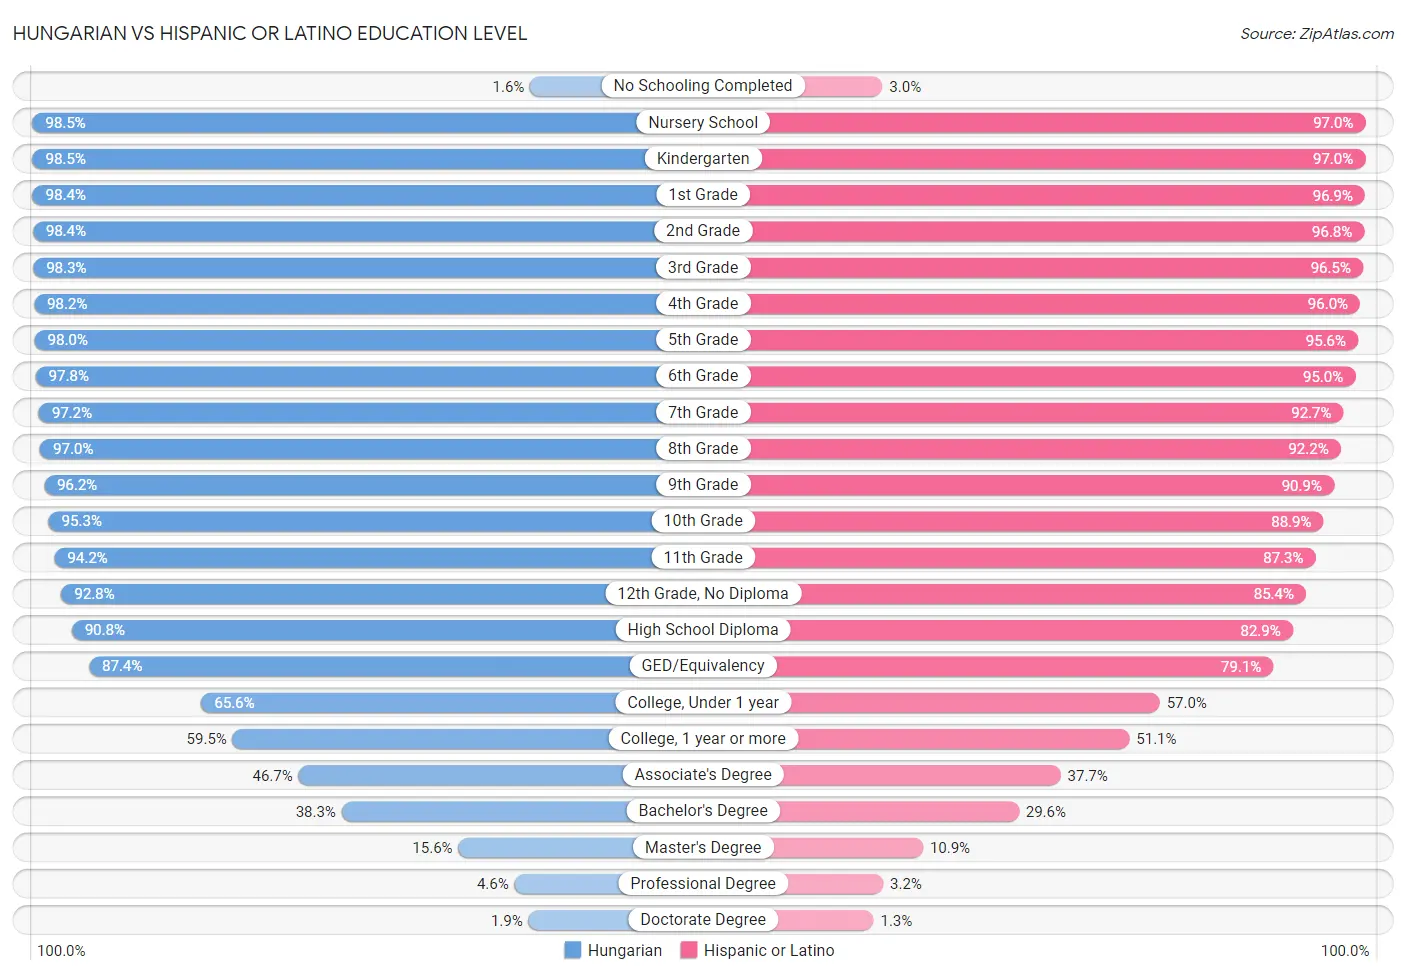 Hungarian vs Hispanic or Latino Education Level